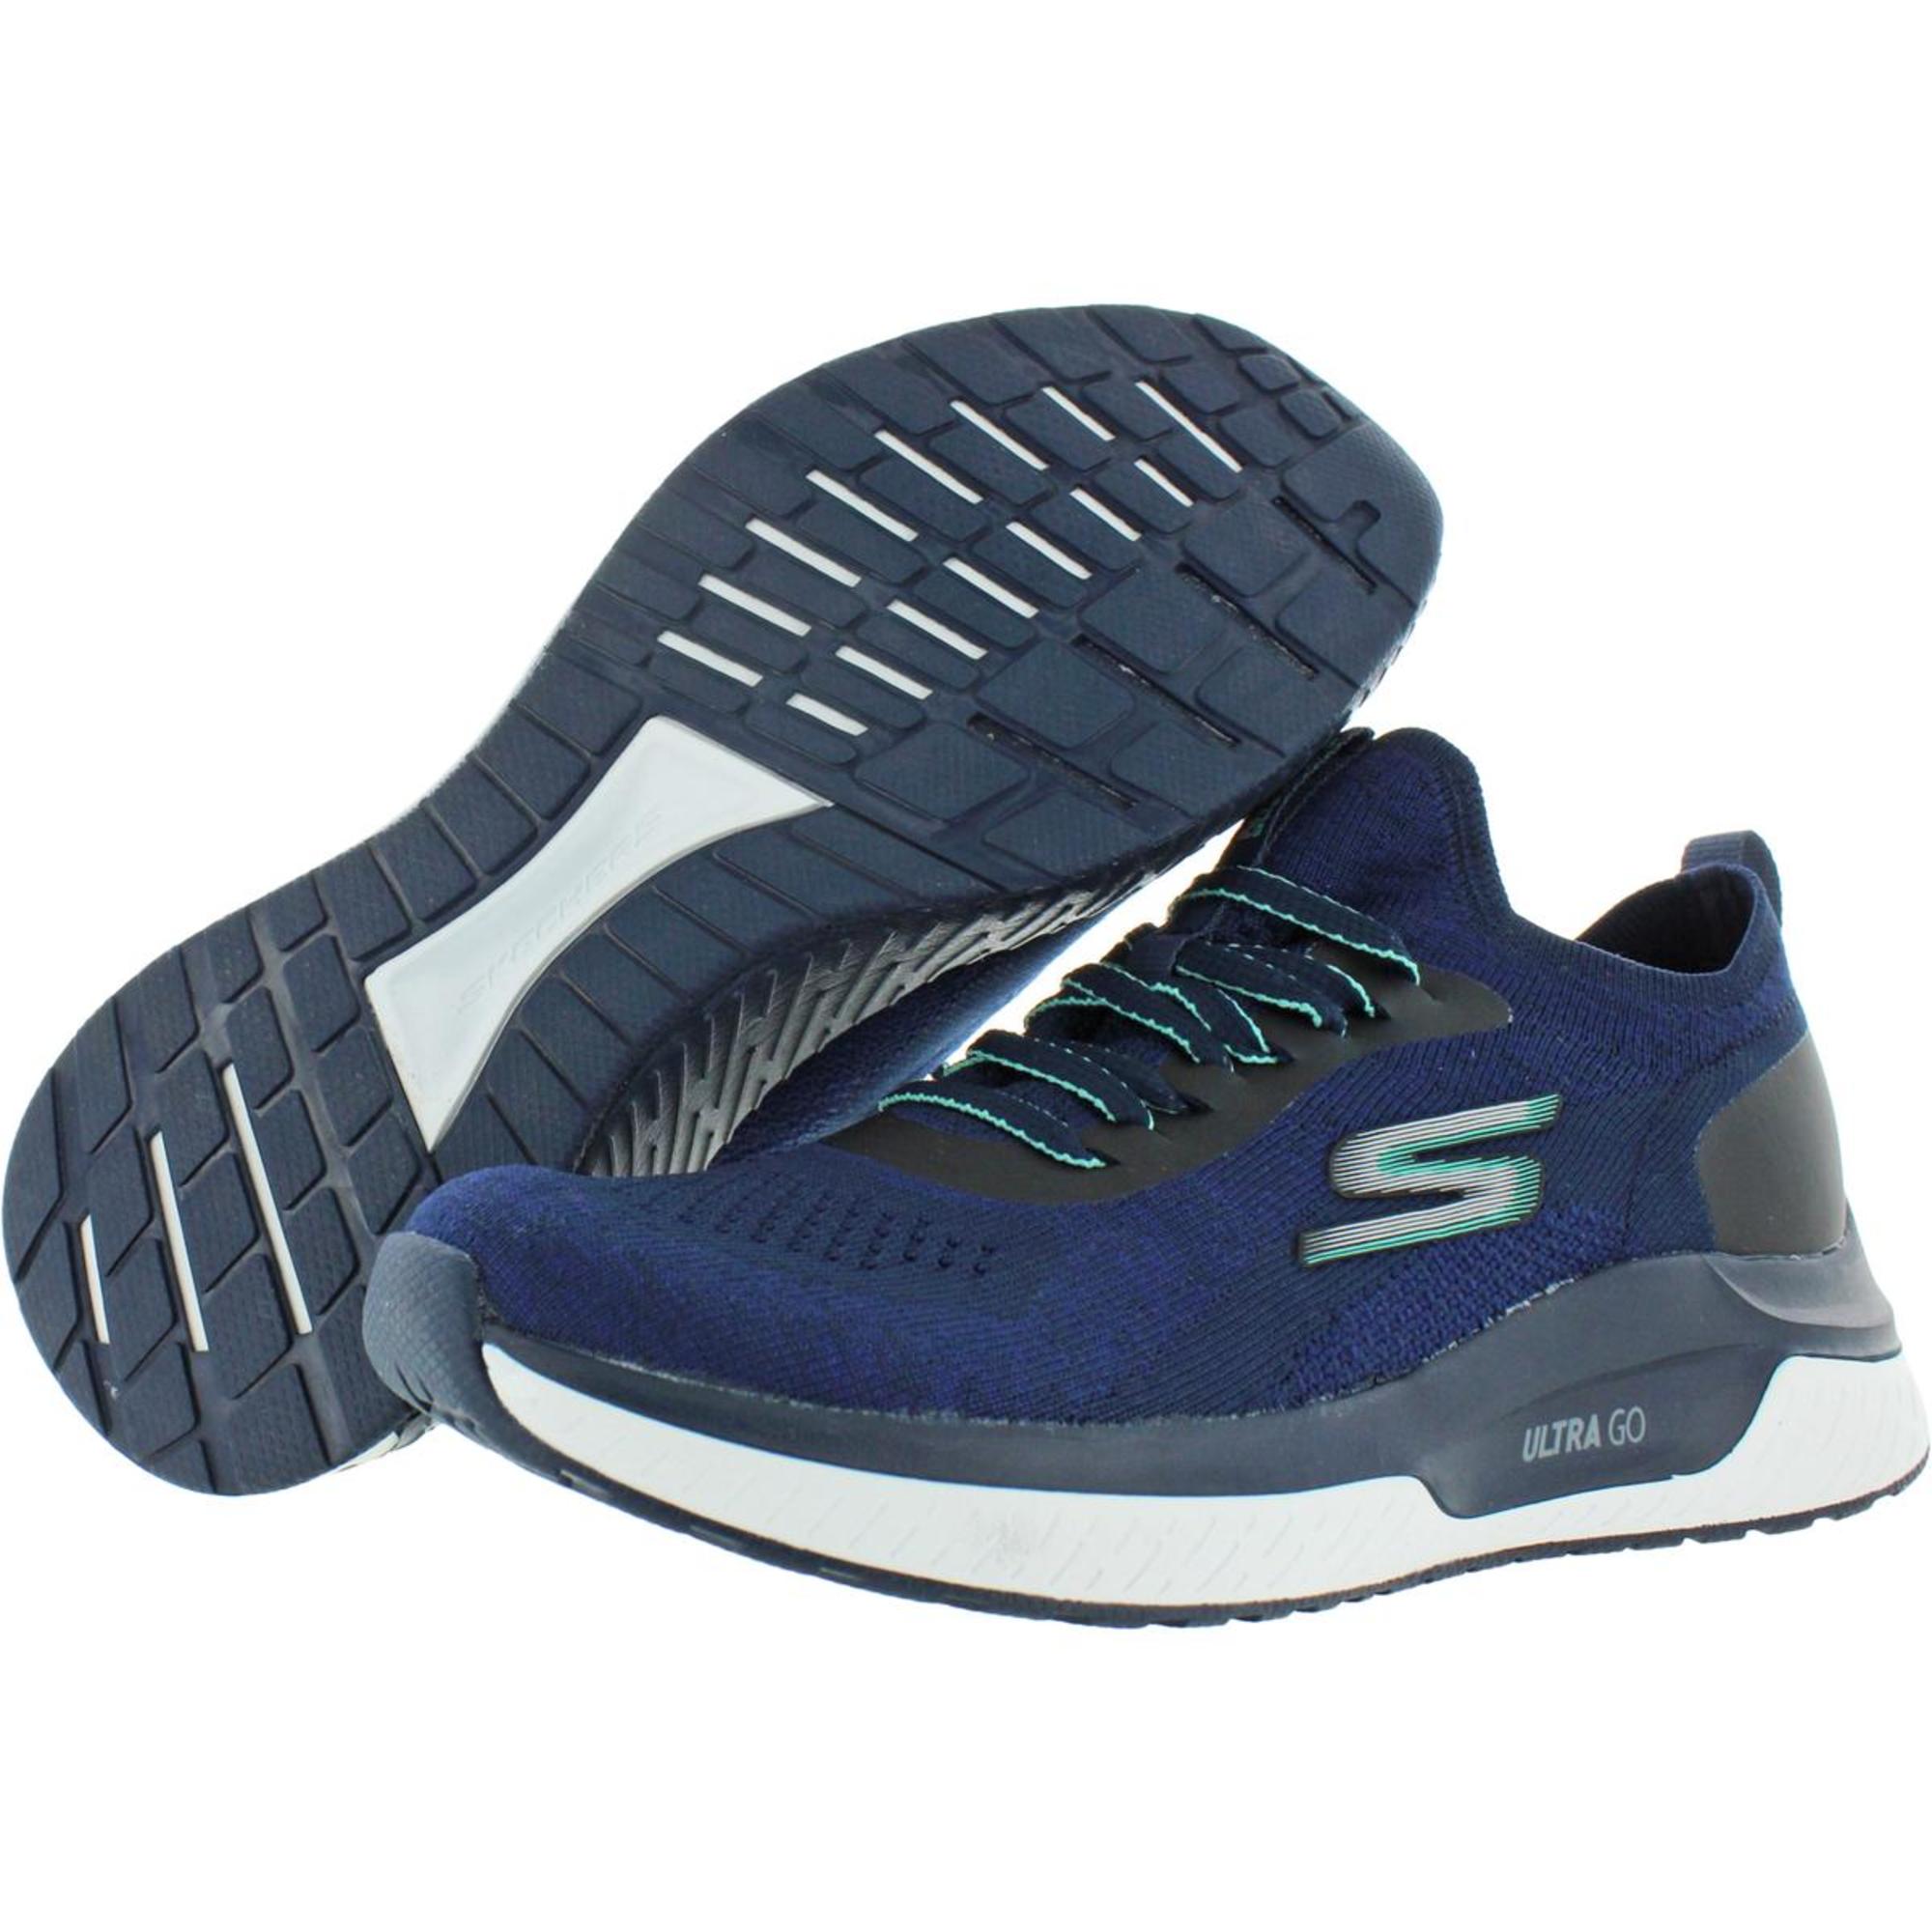 Skechers Gorun Steady Sneakers Navy/Turquoise